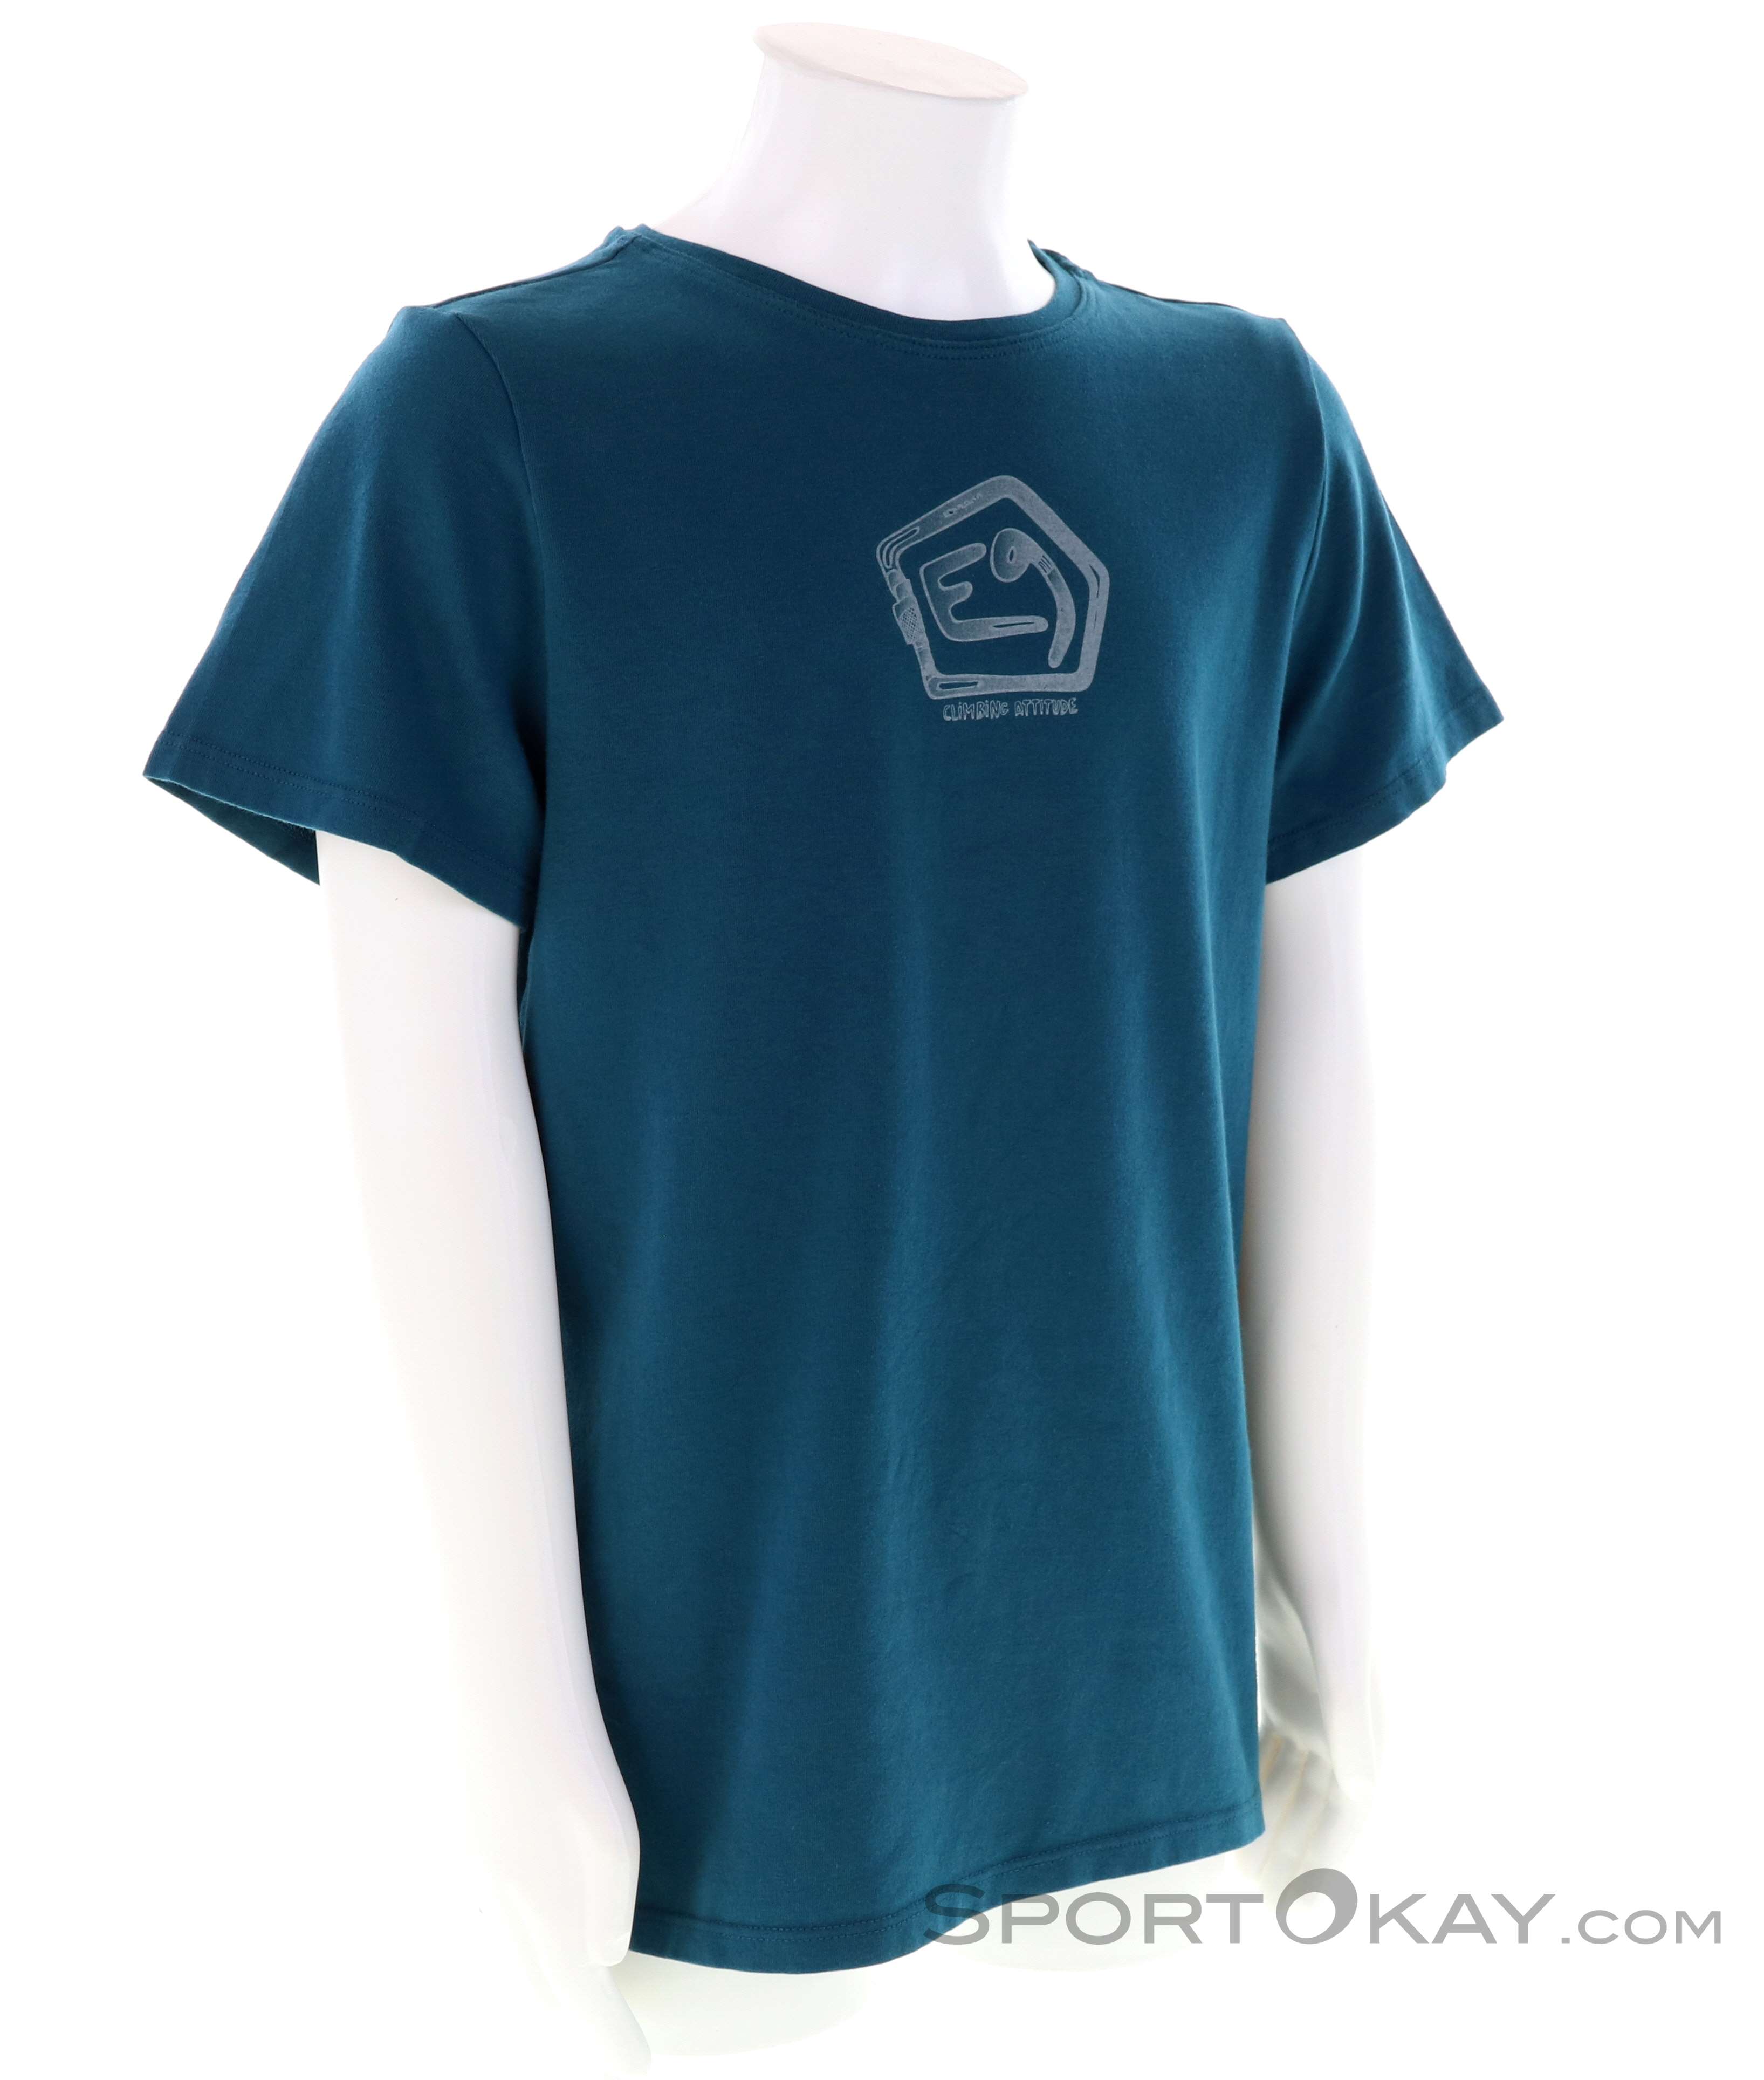 E9 B-Attitude Kinder T-Shirt-Blau-128